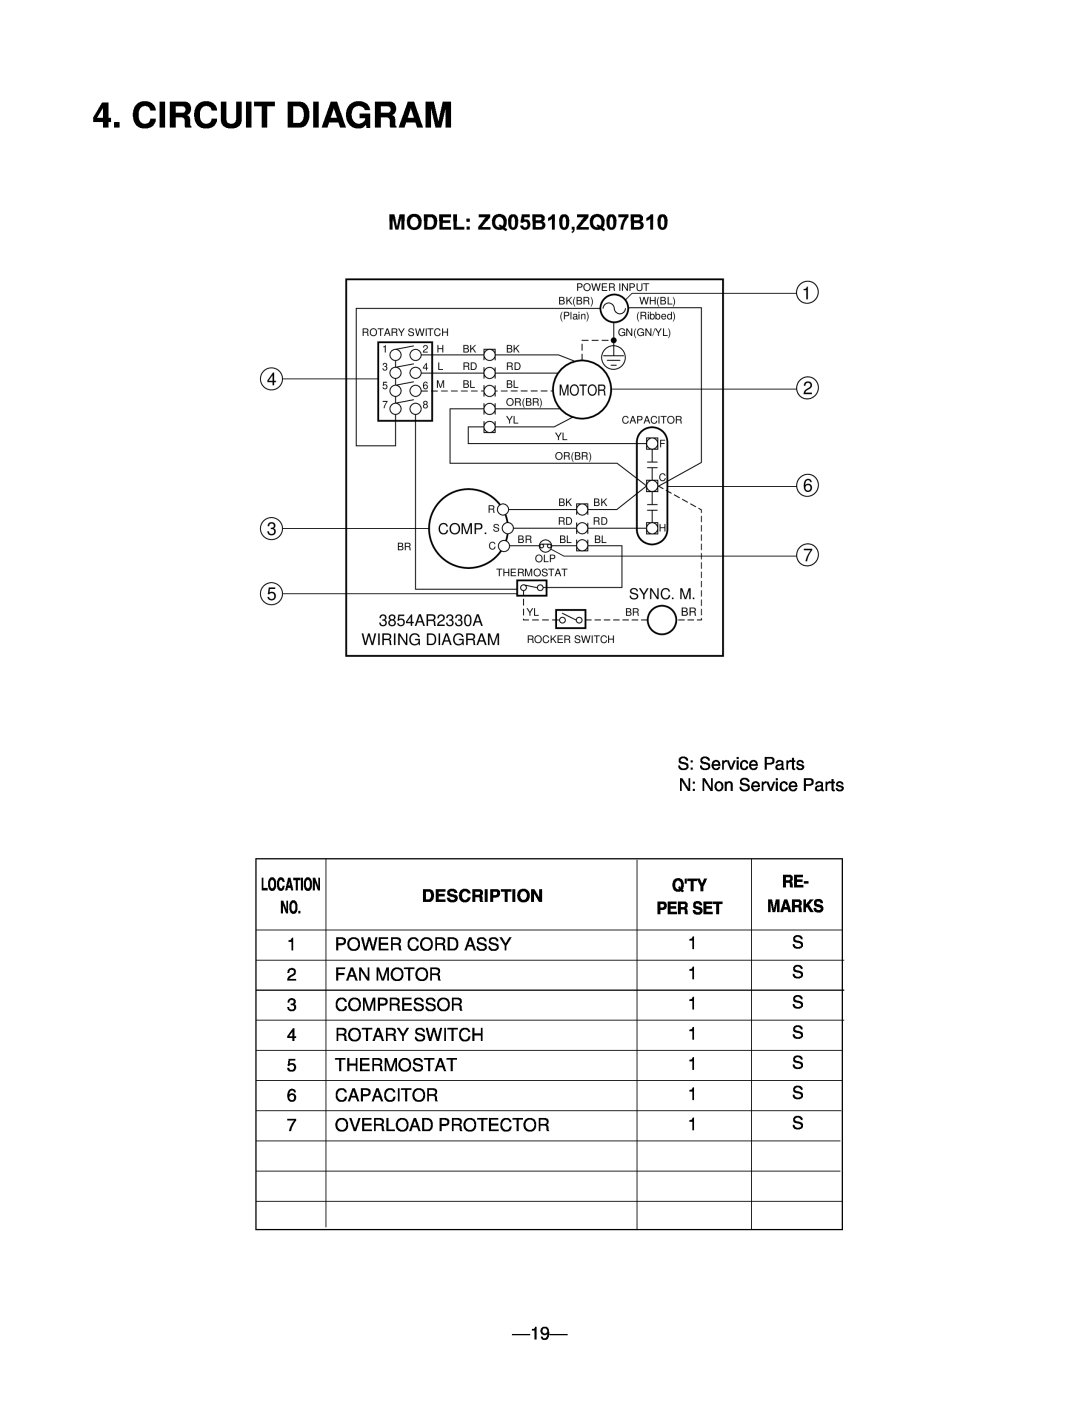 Friedrich manual Circuit Diagram, Description, MODEL ZQ05B10,ZQ07B10 